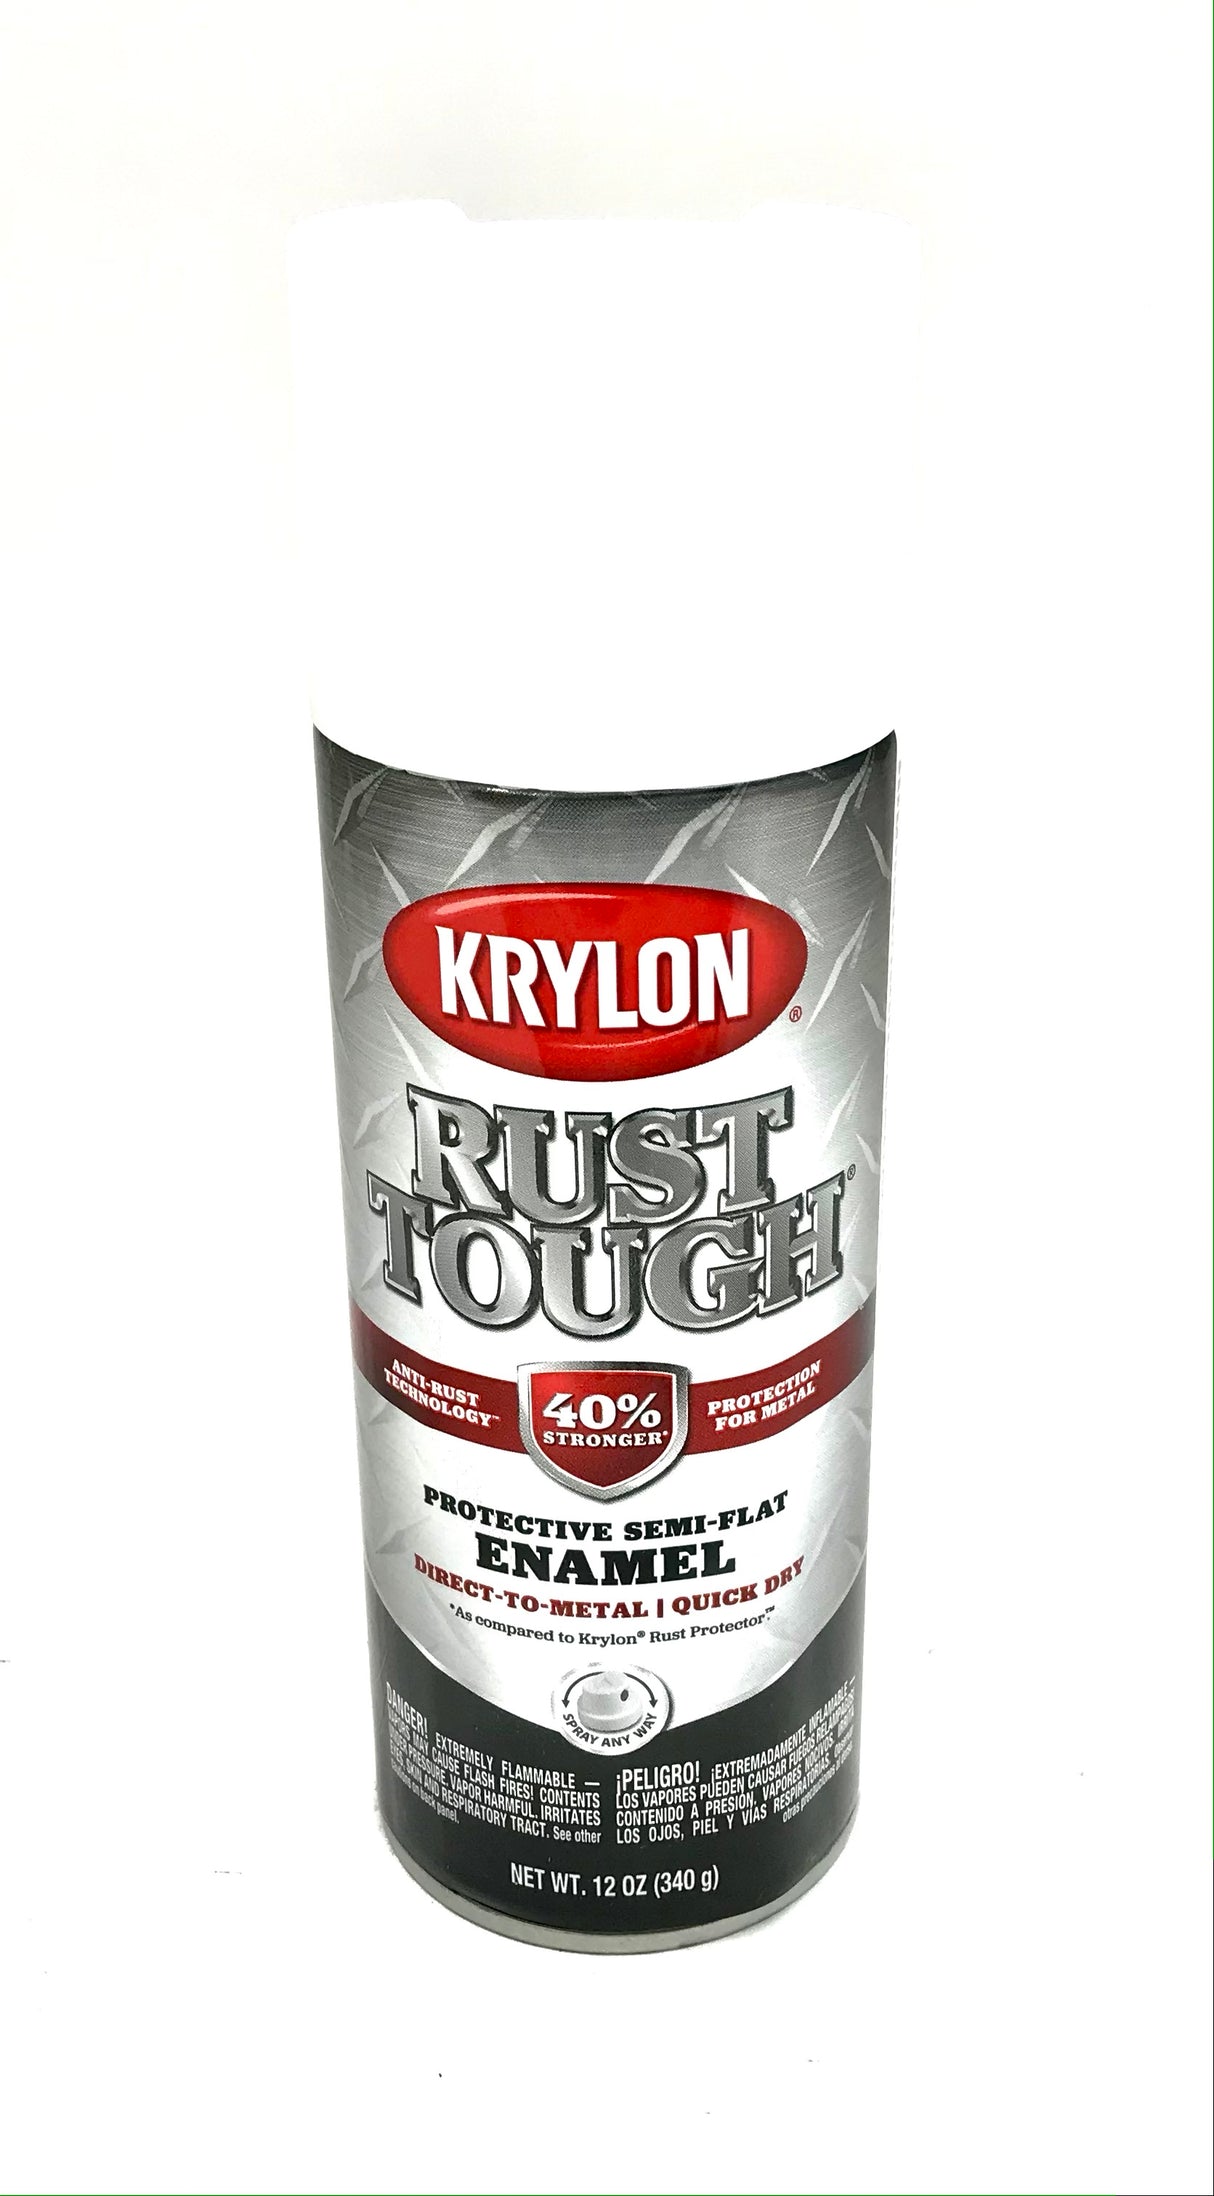 KRYLON RTA9201 SEMI-FLAT WHITE Rust Tough Protective Enamel - Quick Dry - 40% Stronger - 12 oz Aerosol